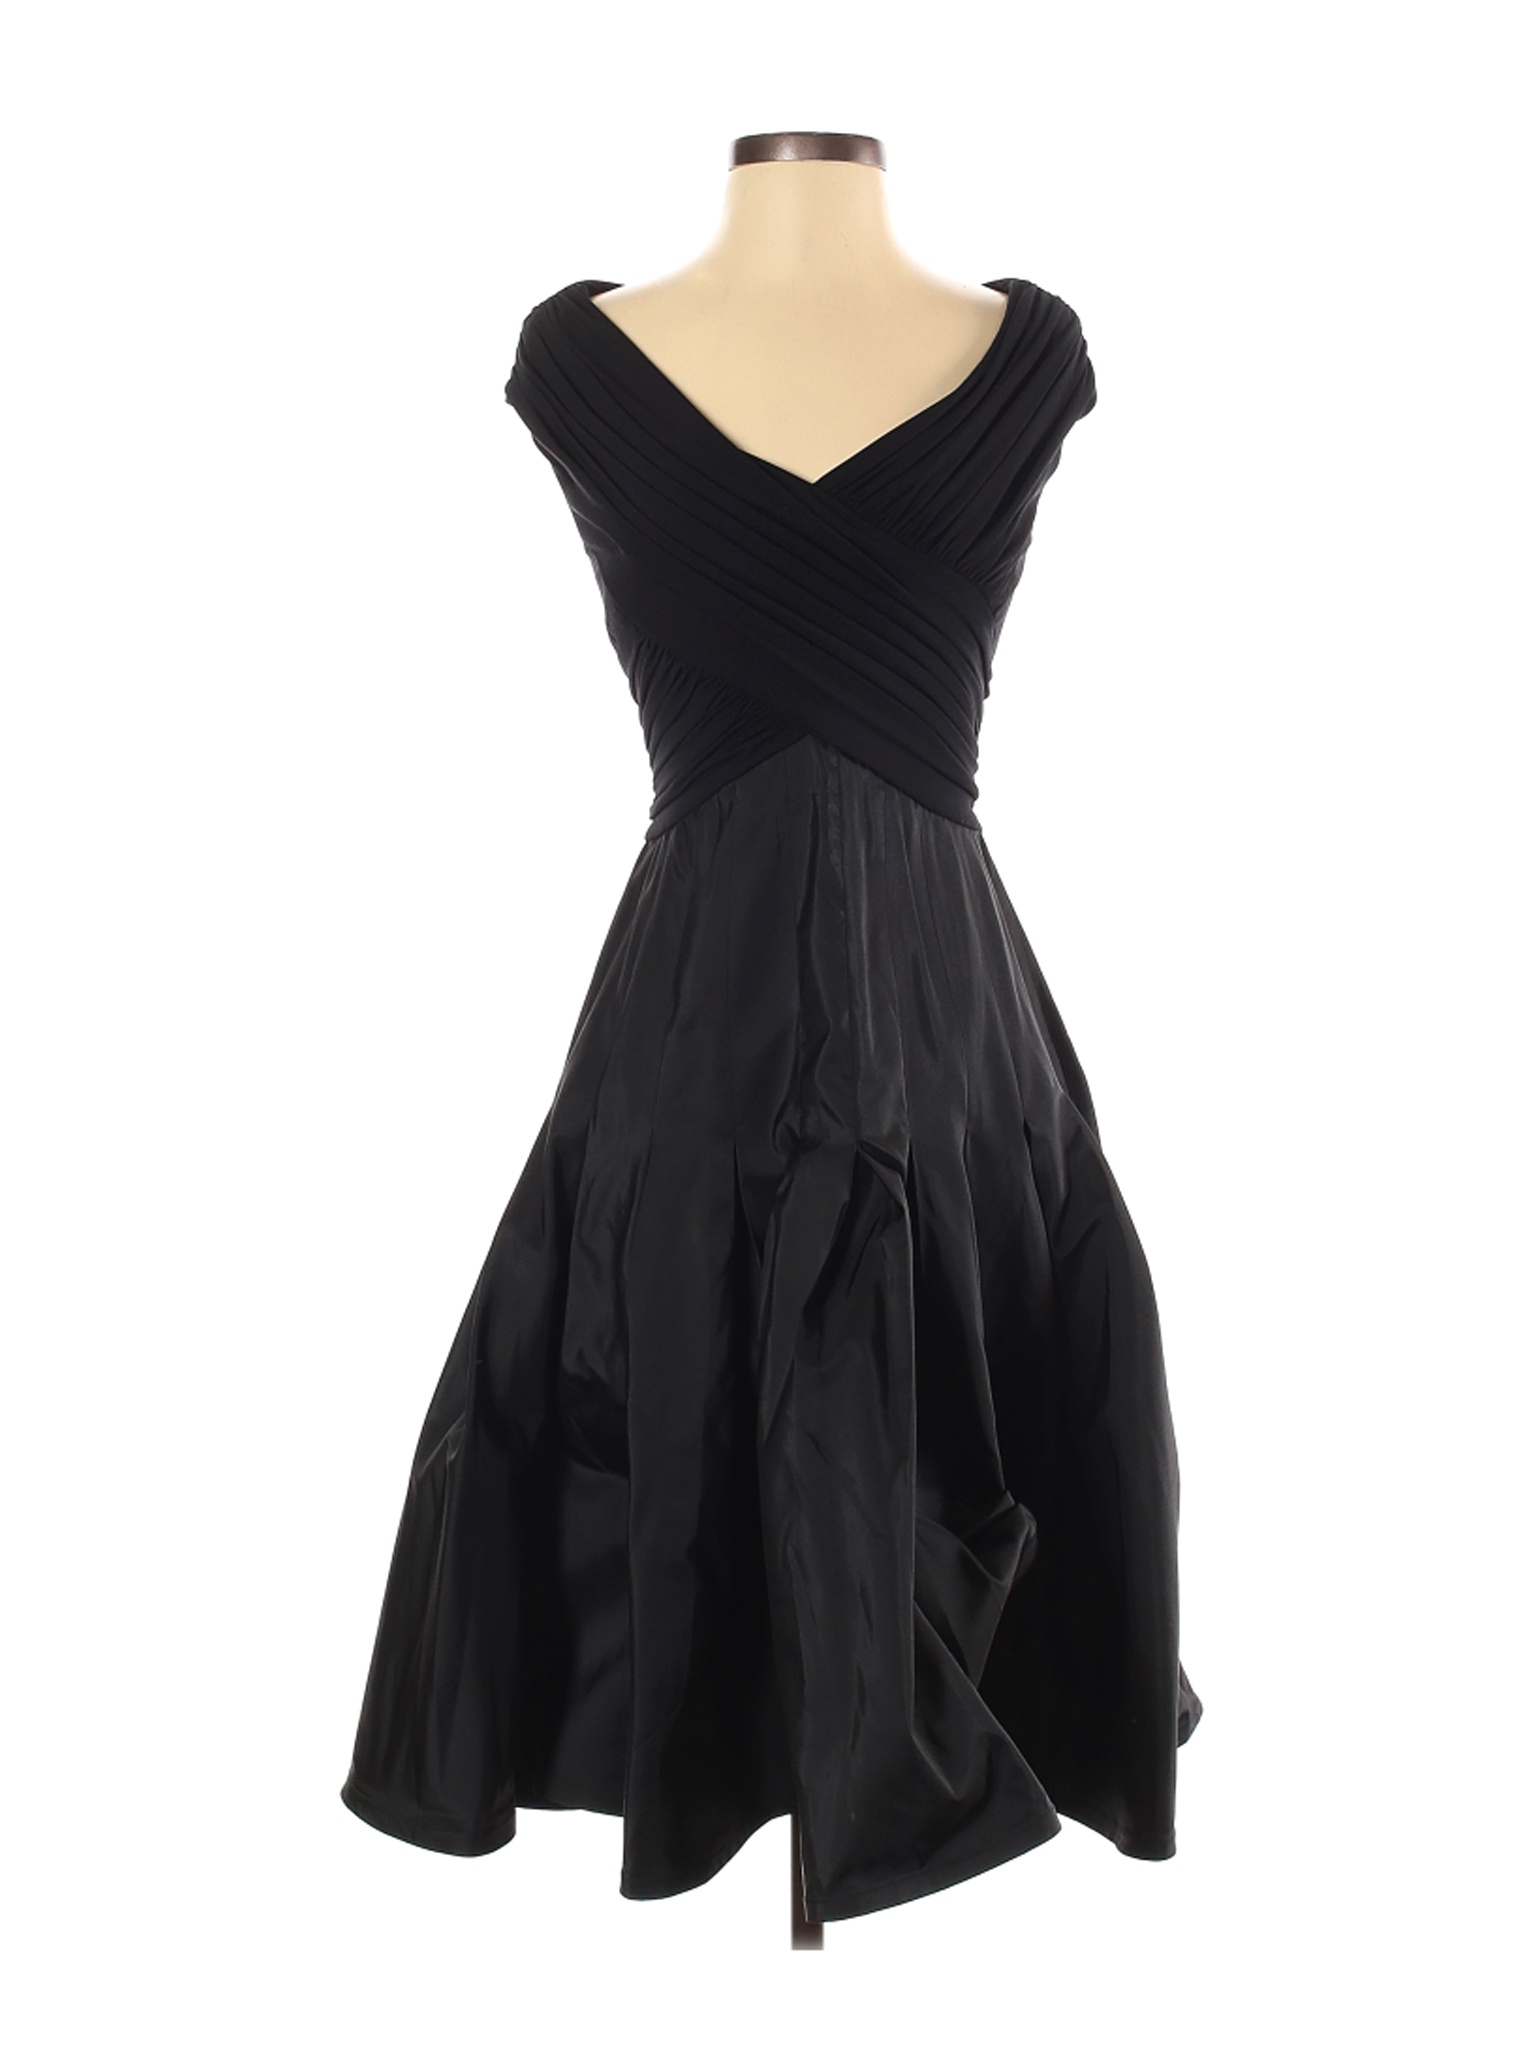 Tadashi Women Black Cocktail Dress 4 | eBay